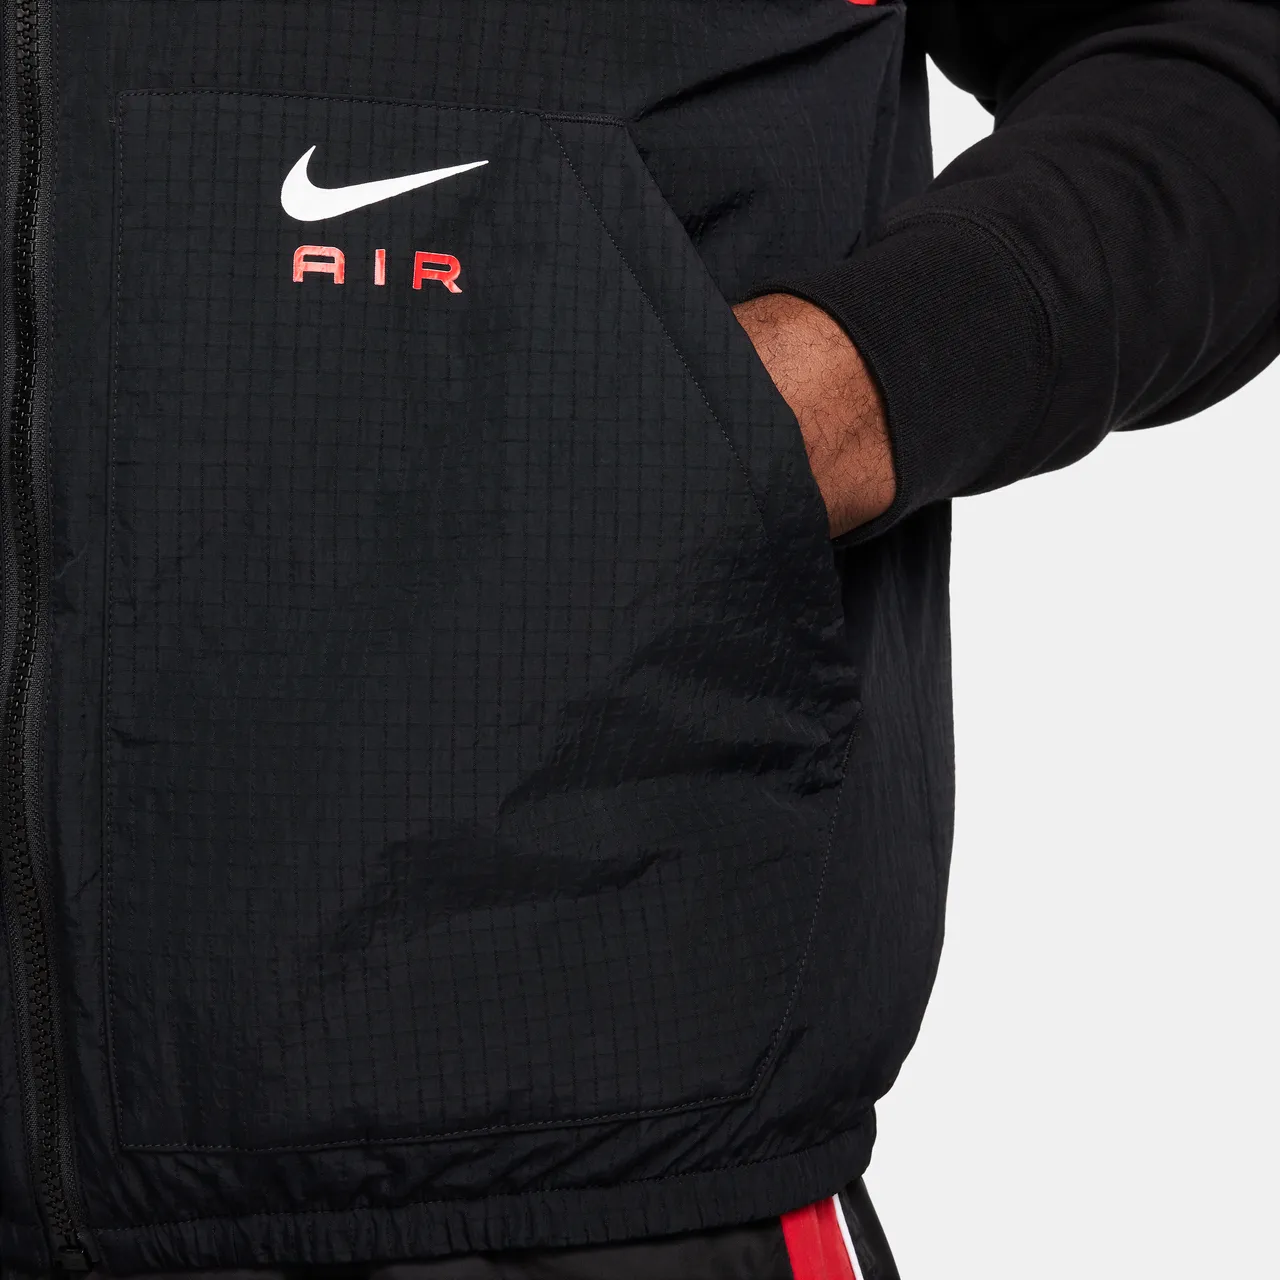 Nike Sportswear klassieke Therma-FIT bodywarmer voor heren - Zwart